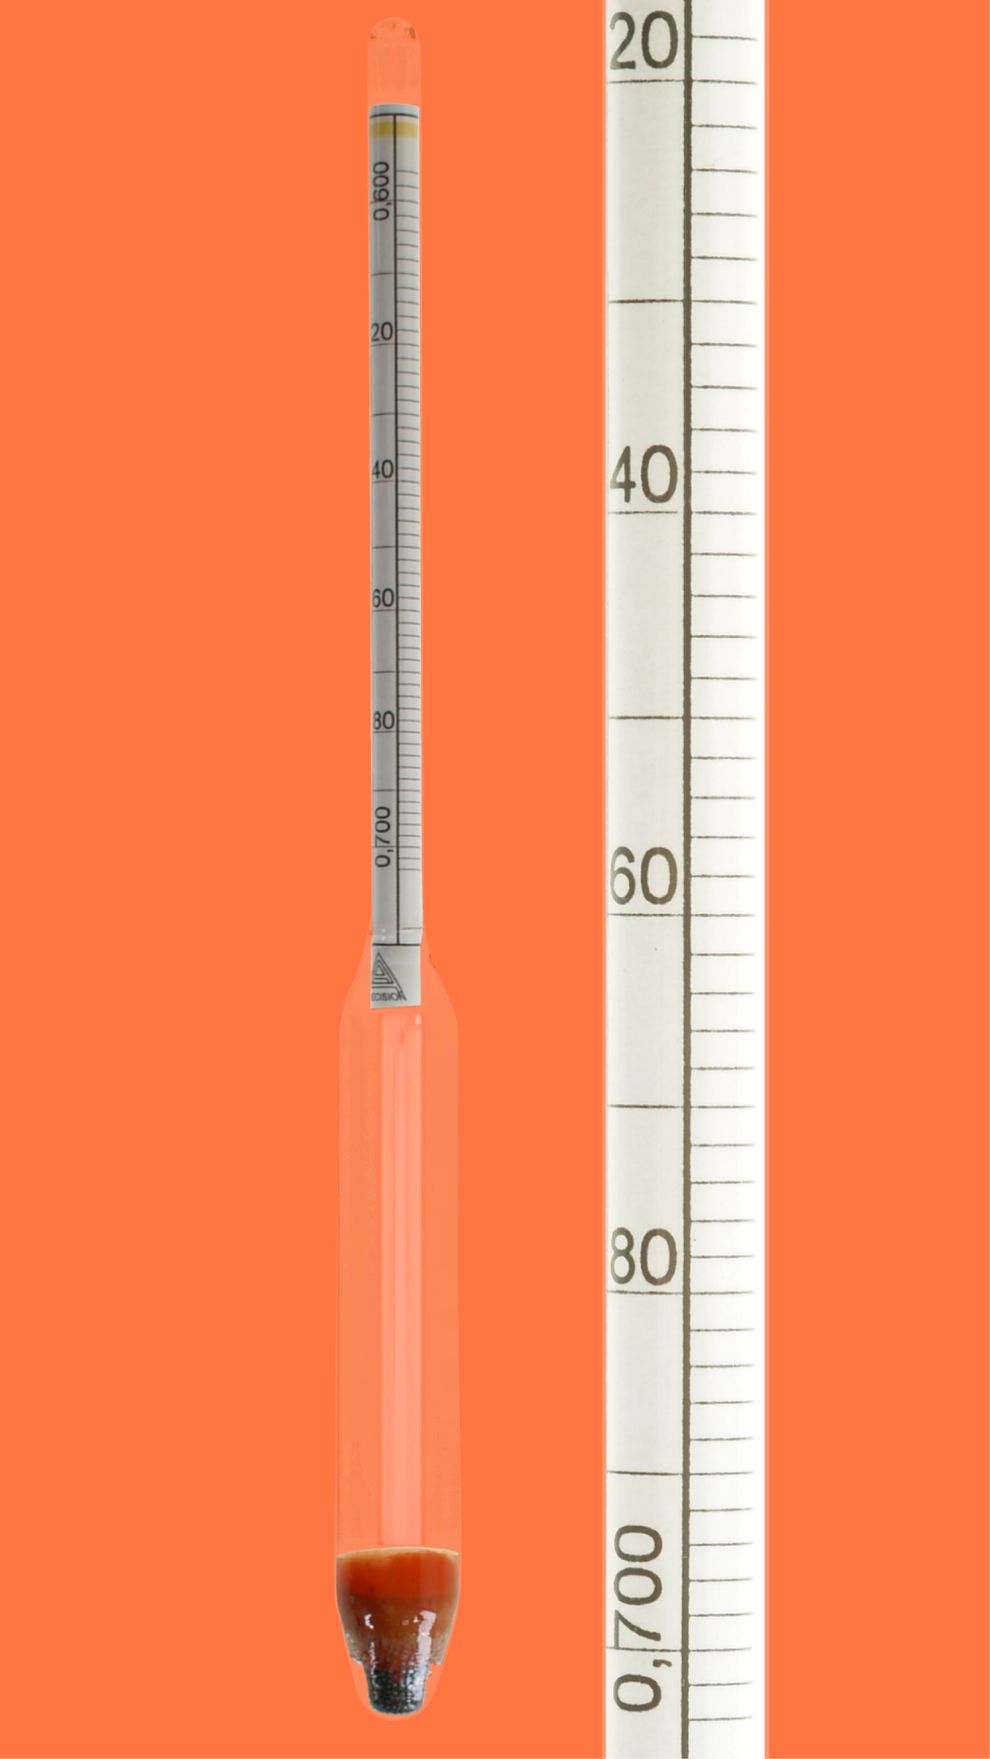 Aräometer, DIN 12791, M100, 1,10-1,20:0,0020g/cm³, Bezugstemp. 20°C, ohne Thermometer